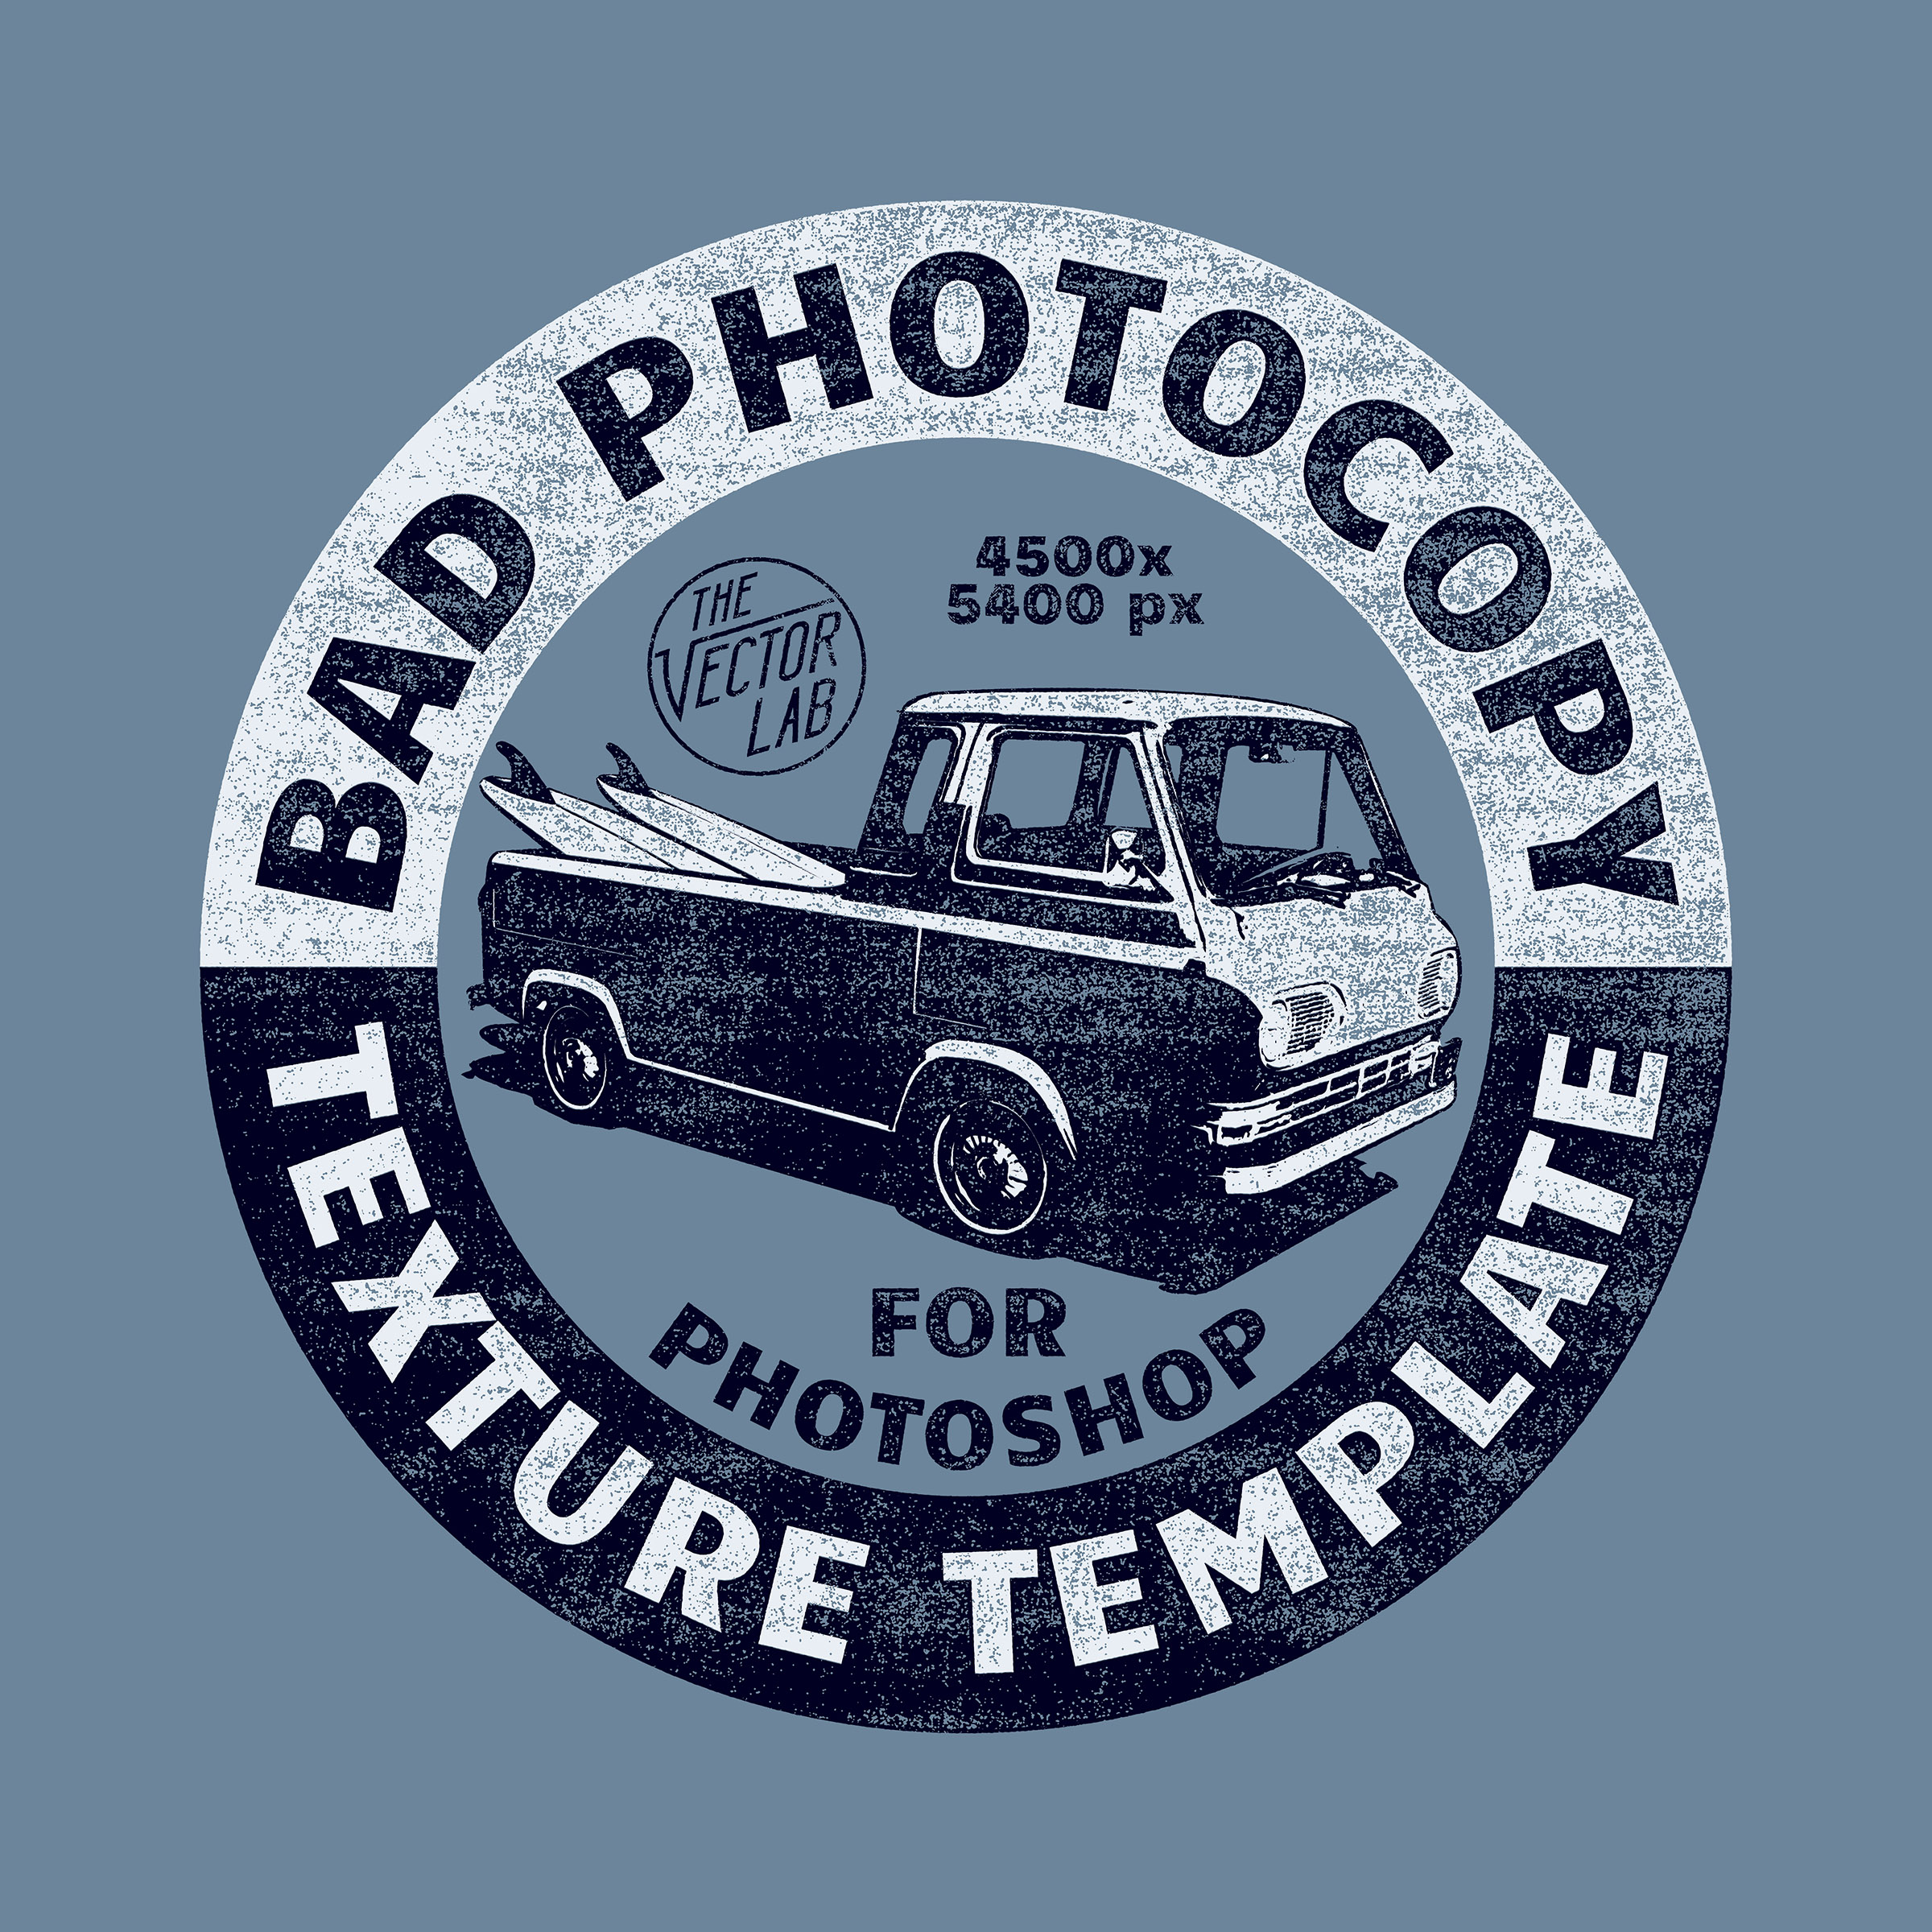 Bad Photocopy Texture Template - Photoshop